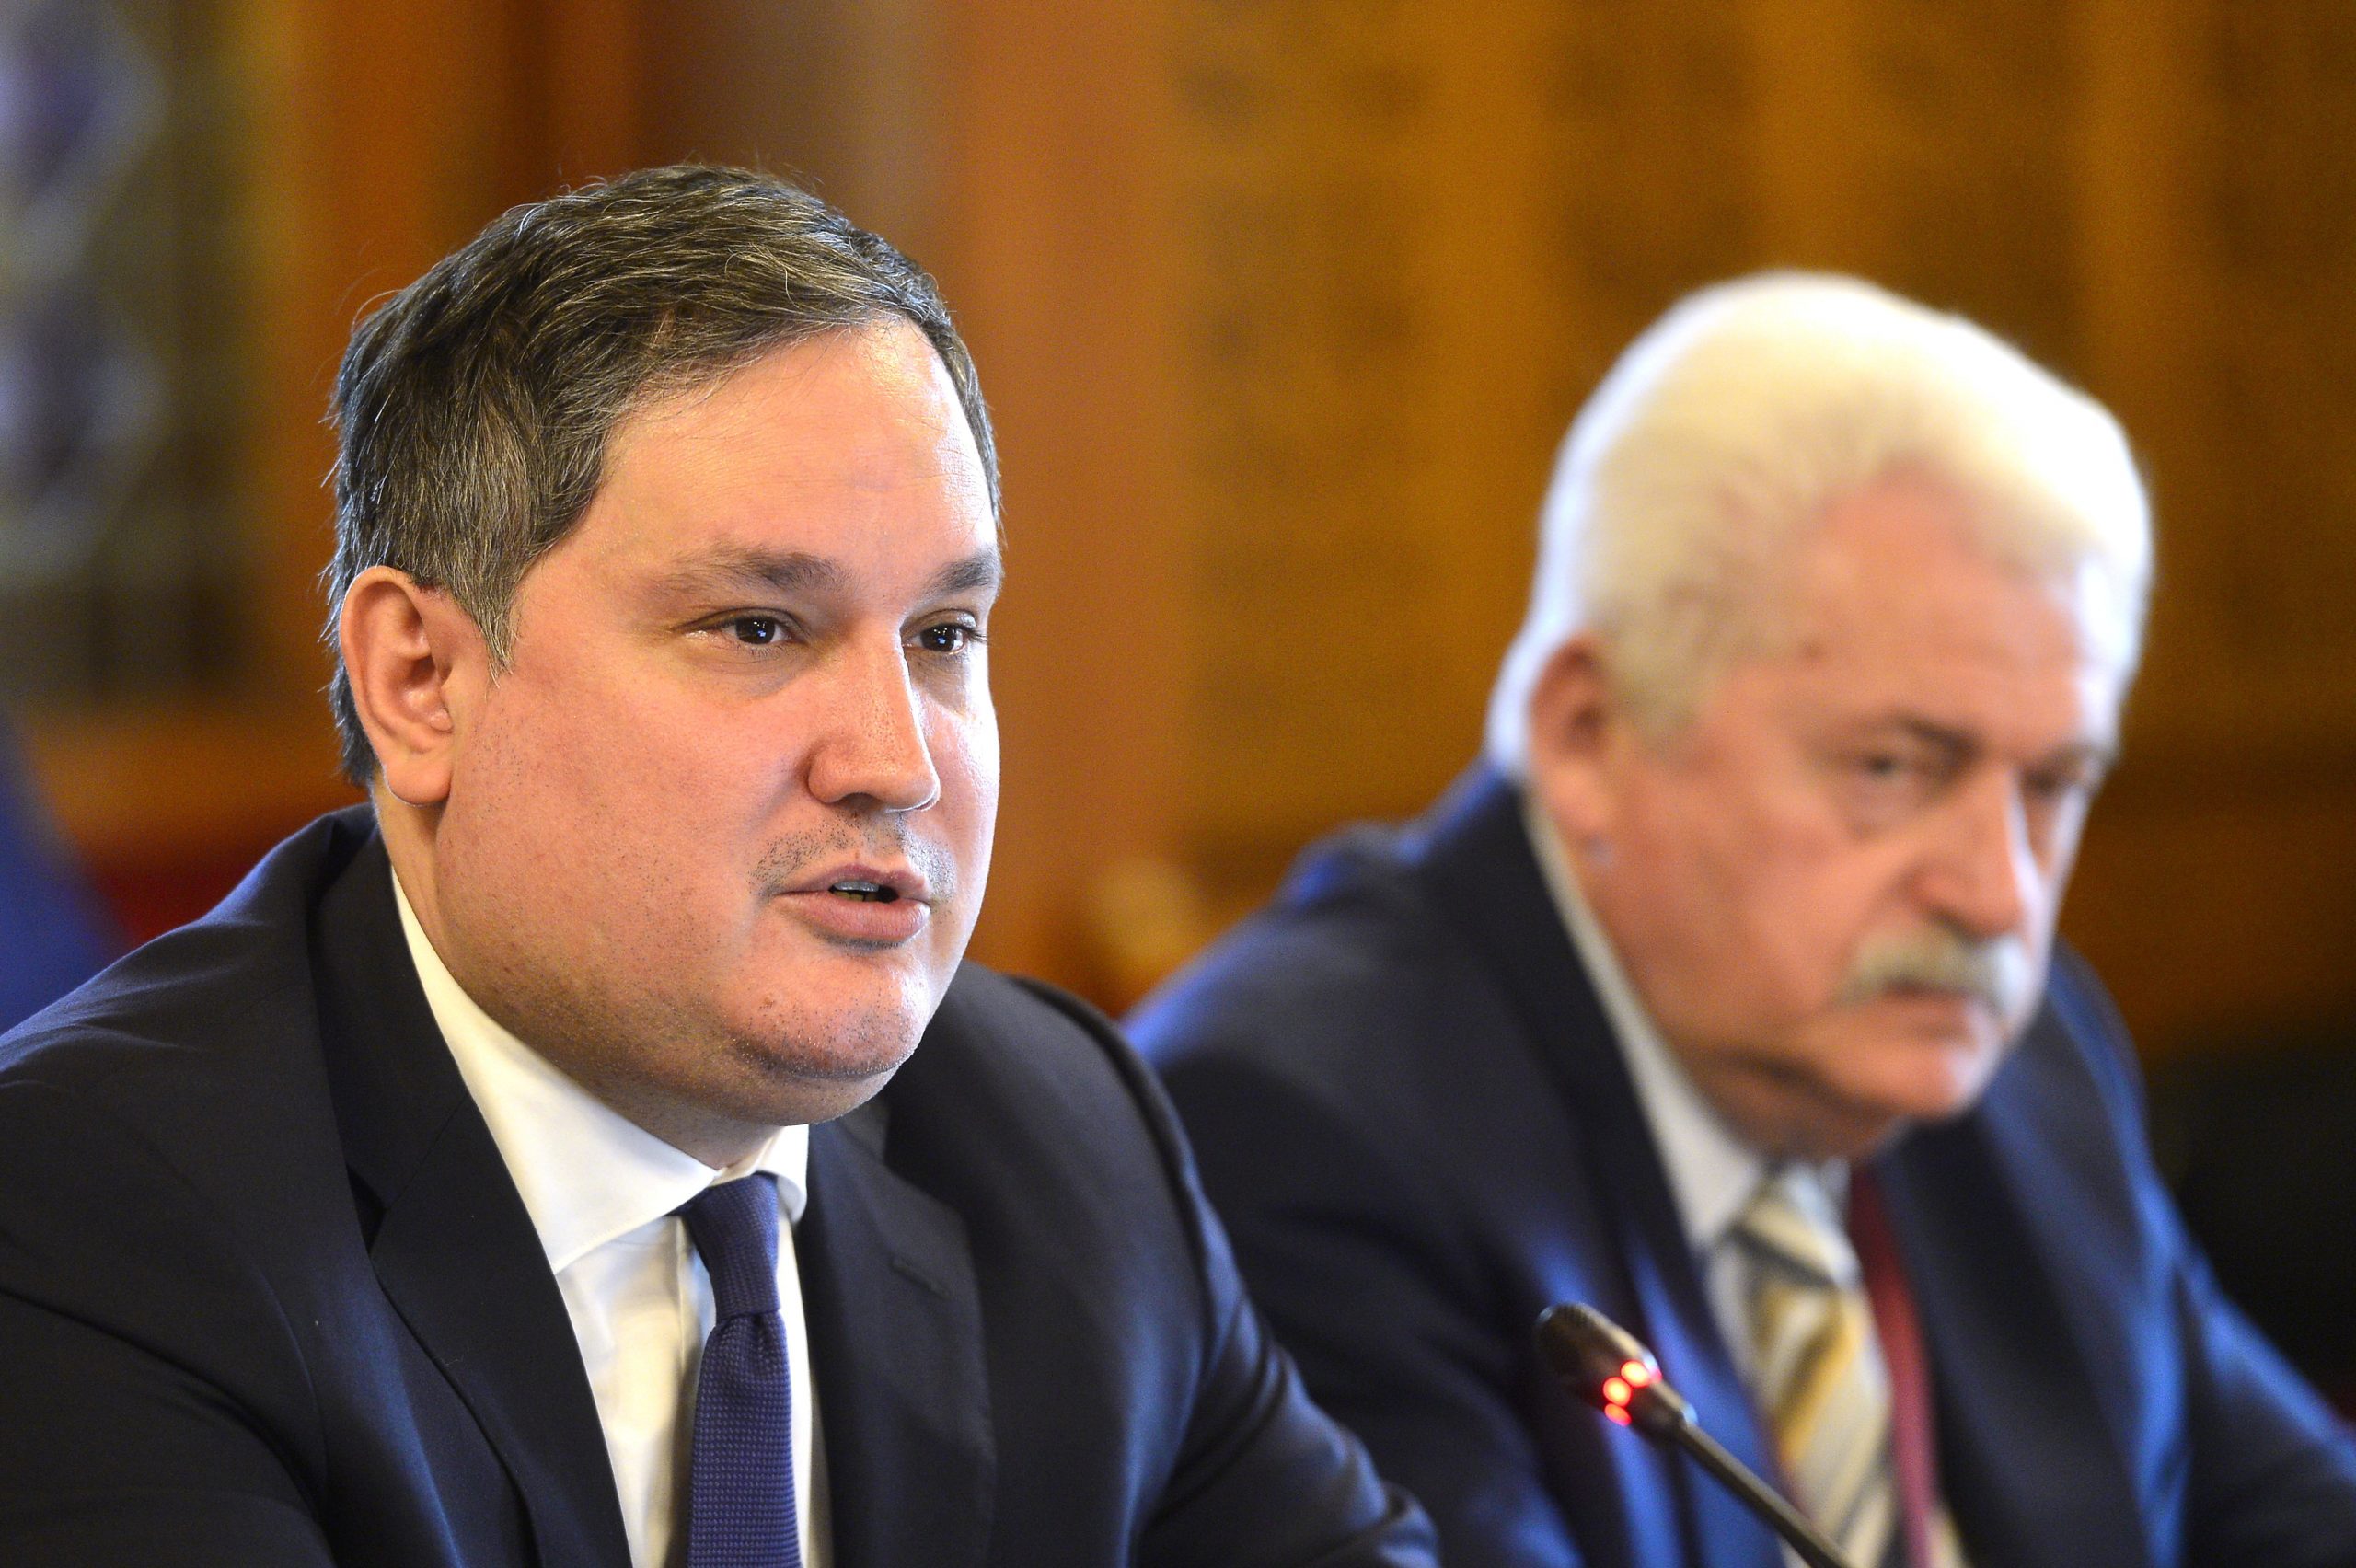 Hungary's economic development minister slams Ryanair CEO's remarks